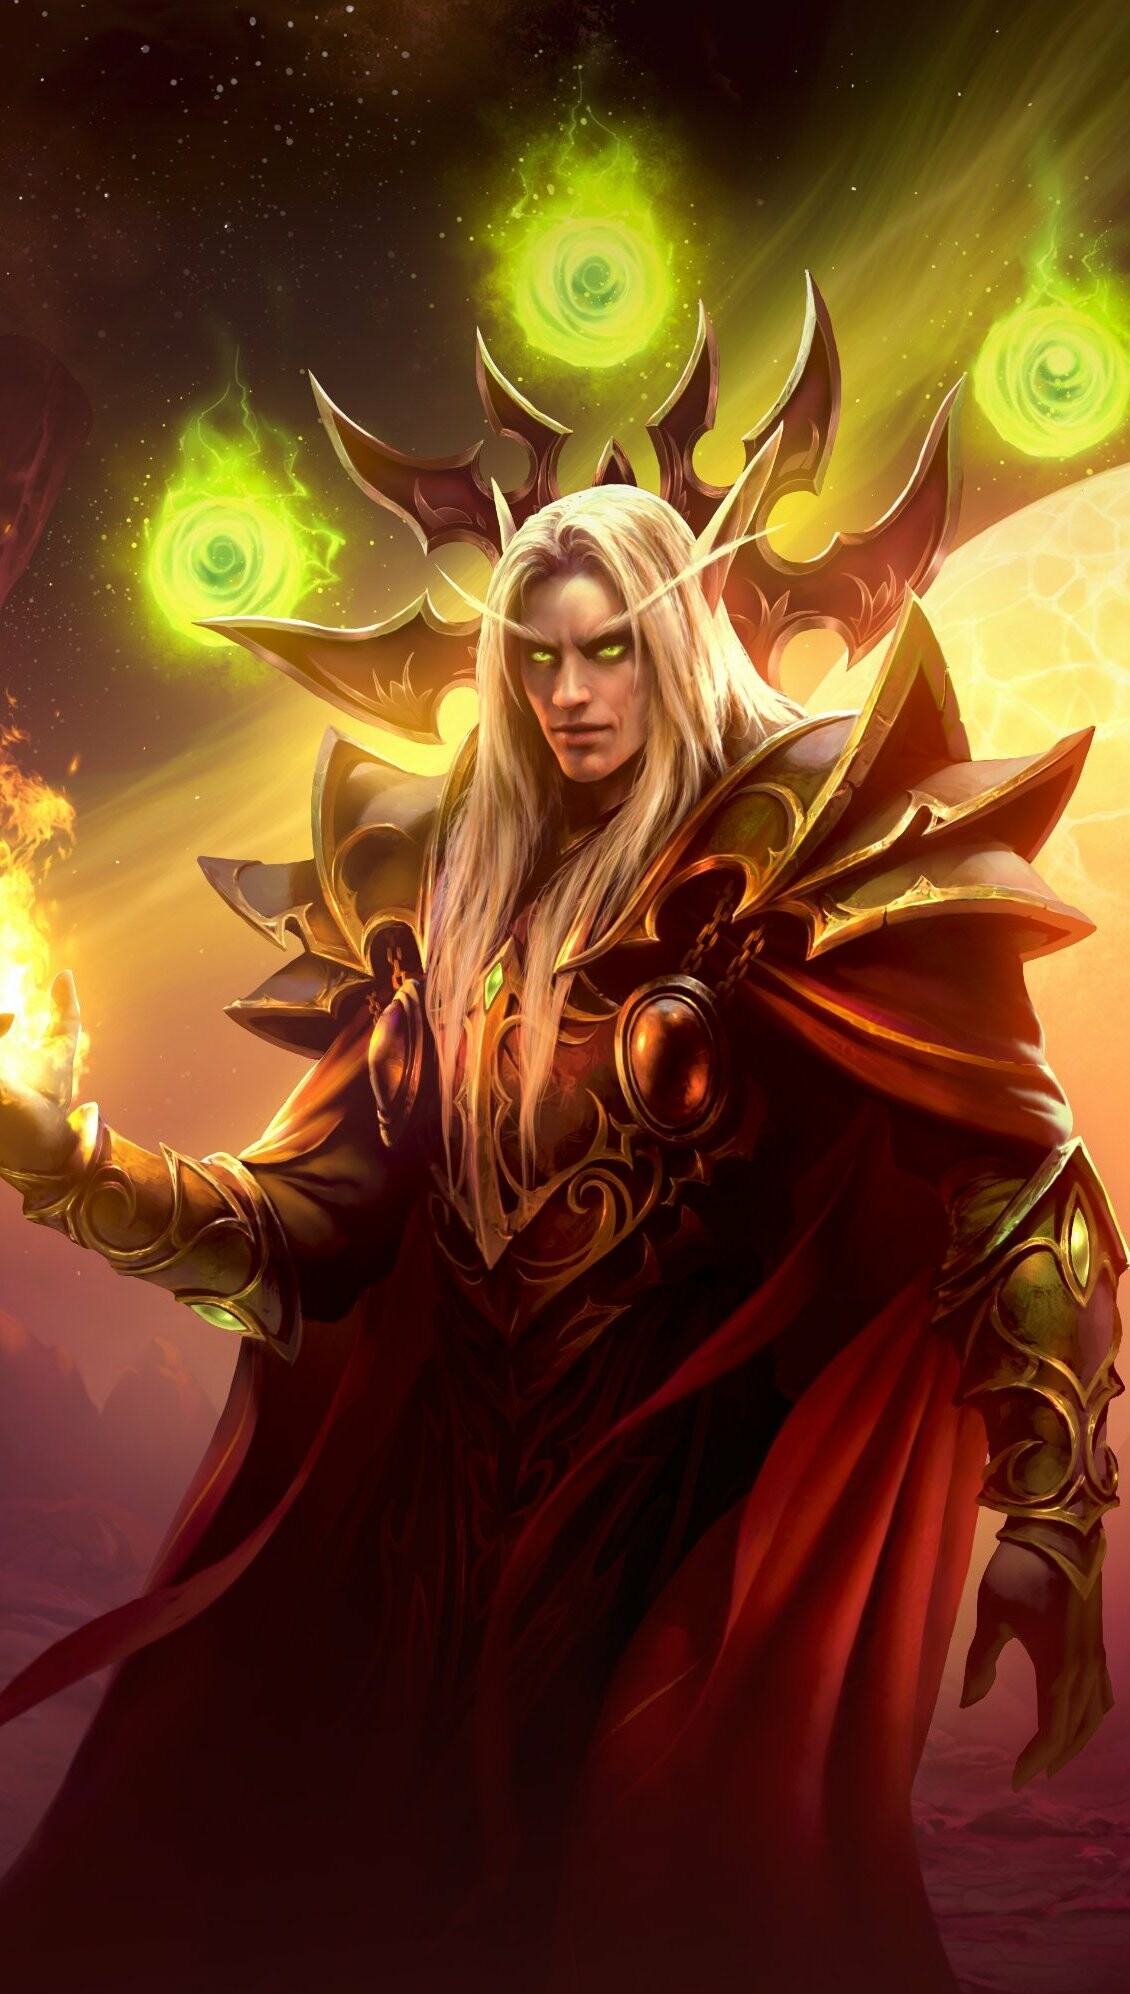 World of Warcraft: Kael’thas Sunstrider, Blood Elf, Tempest Keep. 1130x2000 HD Wallpaper.